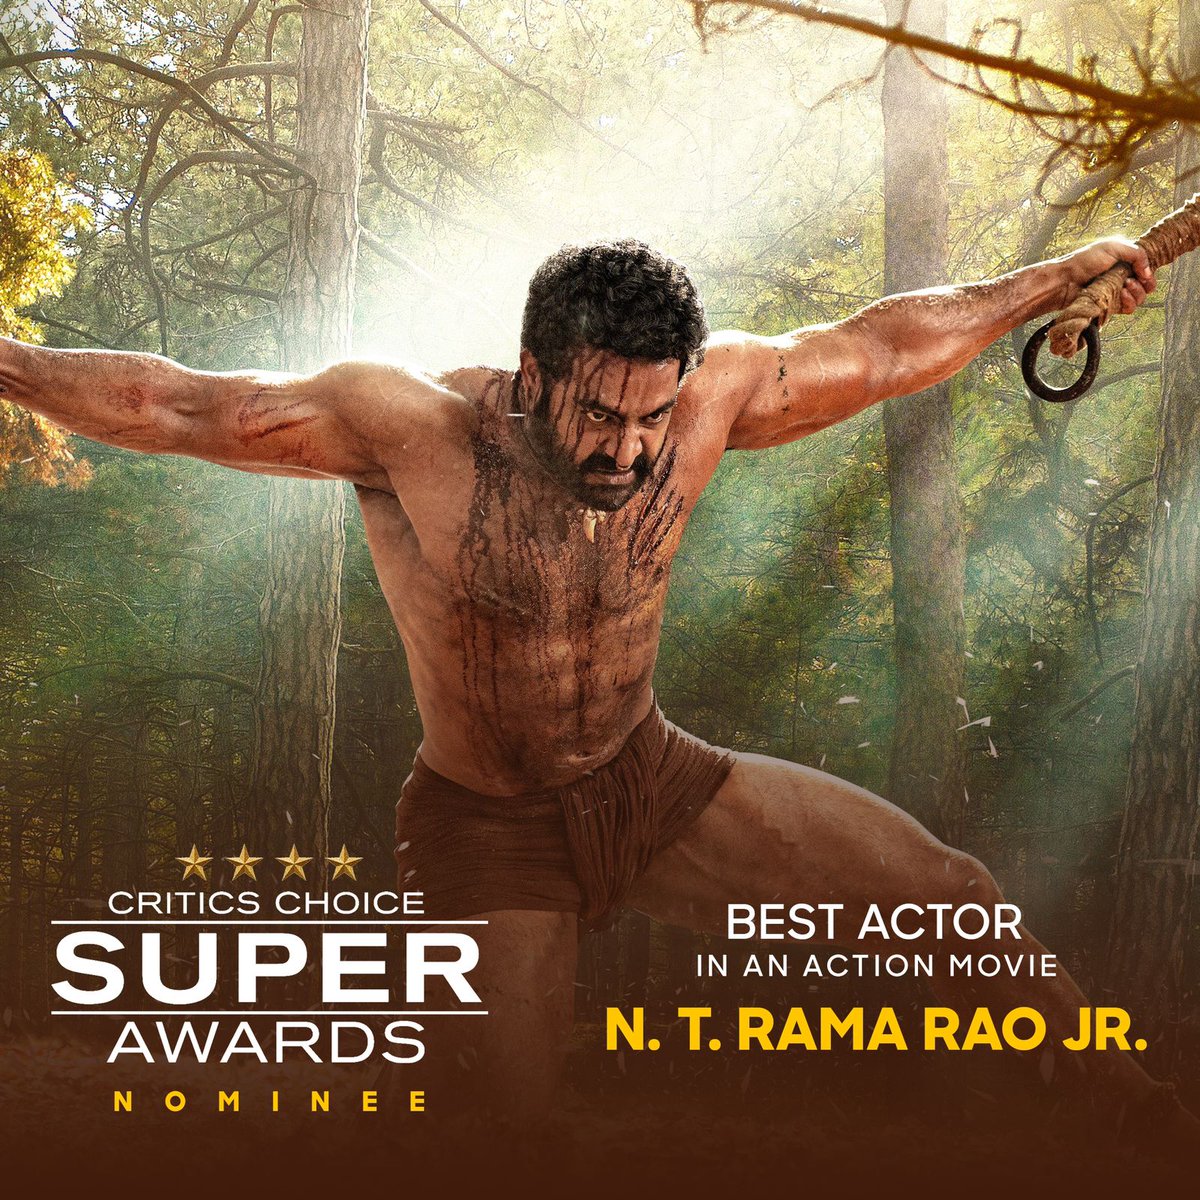 Man of Masses NTR @tarak9999
bags the Best Actor Nomination at the Critics Choice Super Awards.
#NTR𓃵
#ManOfMassesNTR 
#CriticsChoiceSuperAwards
#NTRGoesGlobal

JaiNTR ♥️✊🏻